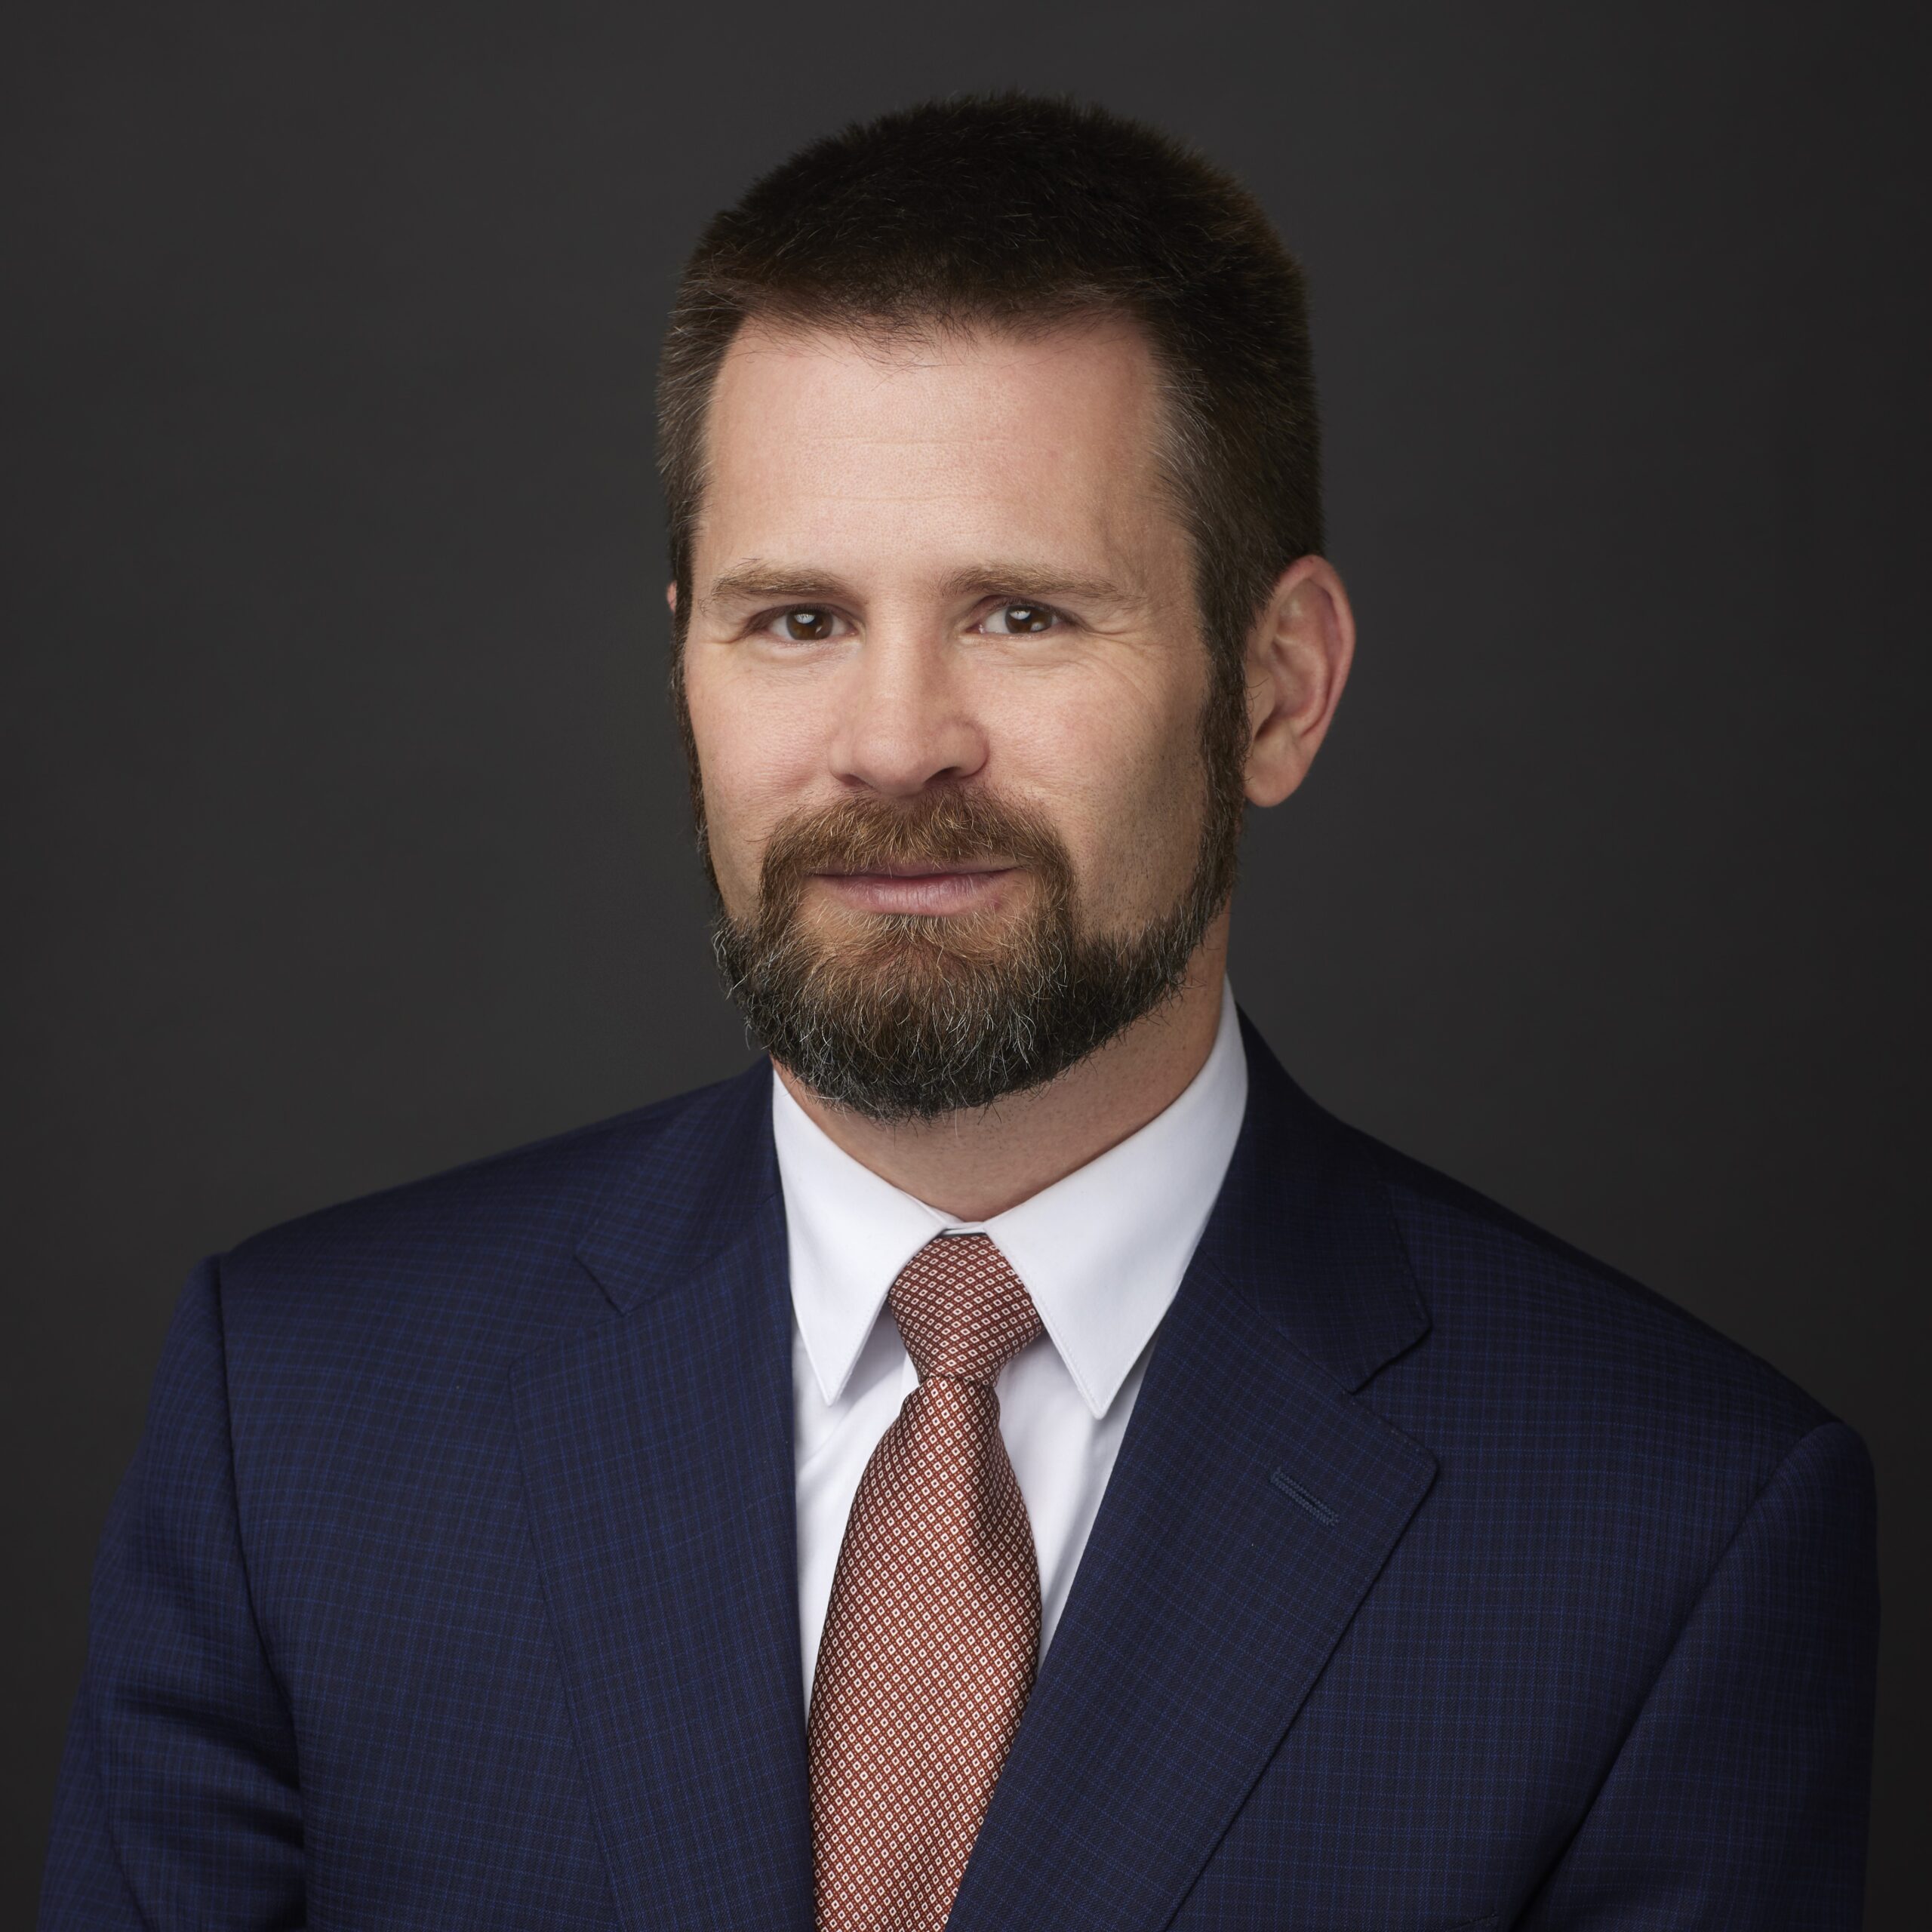 Lawyer David James Expertise Missouri based injury, civil, and criminal lawyer David James